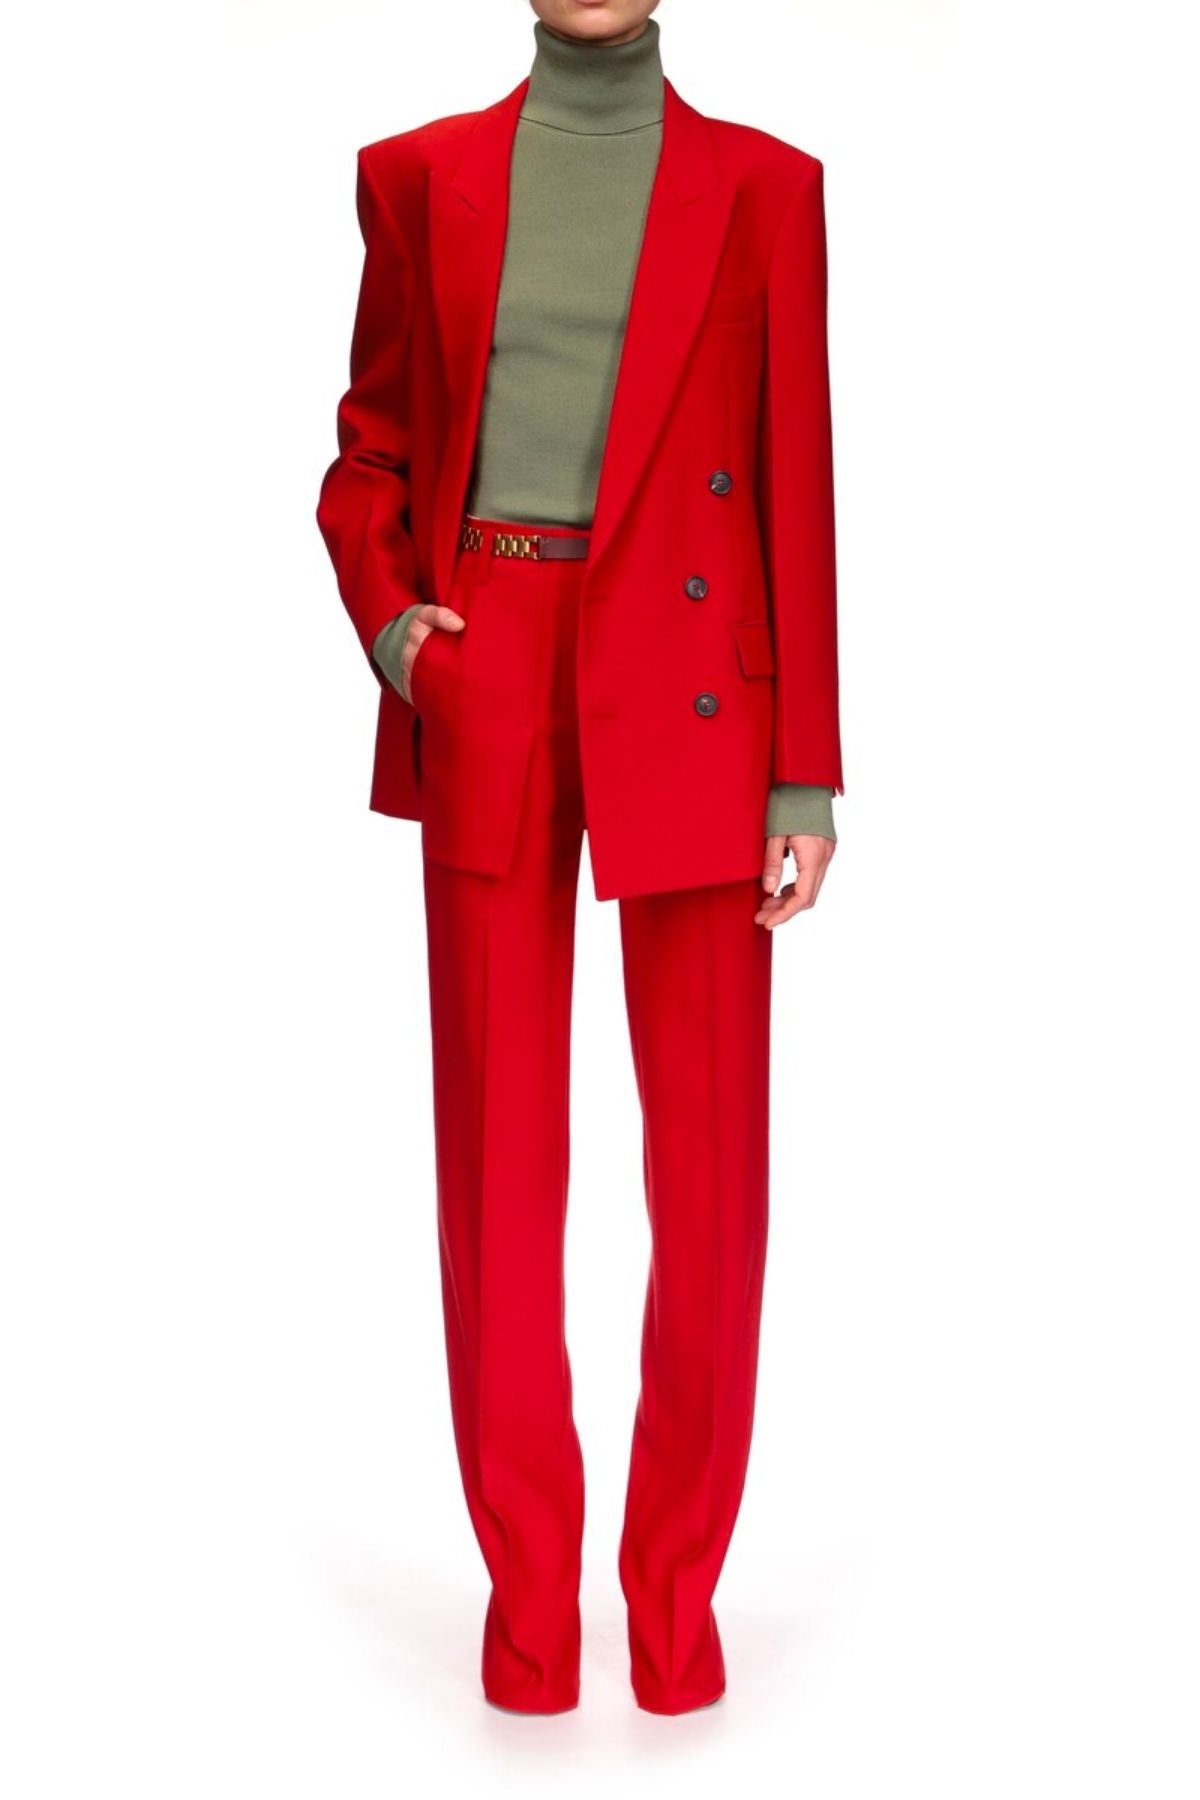 Victoria Beckham Slim Double Breasted Blazer - Poppy Red